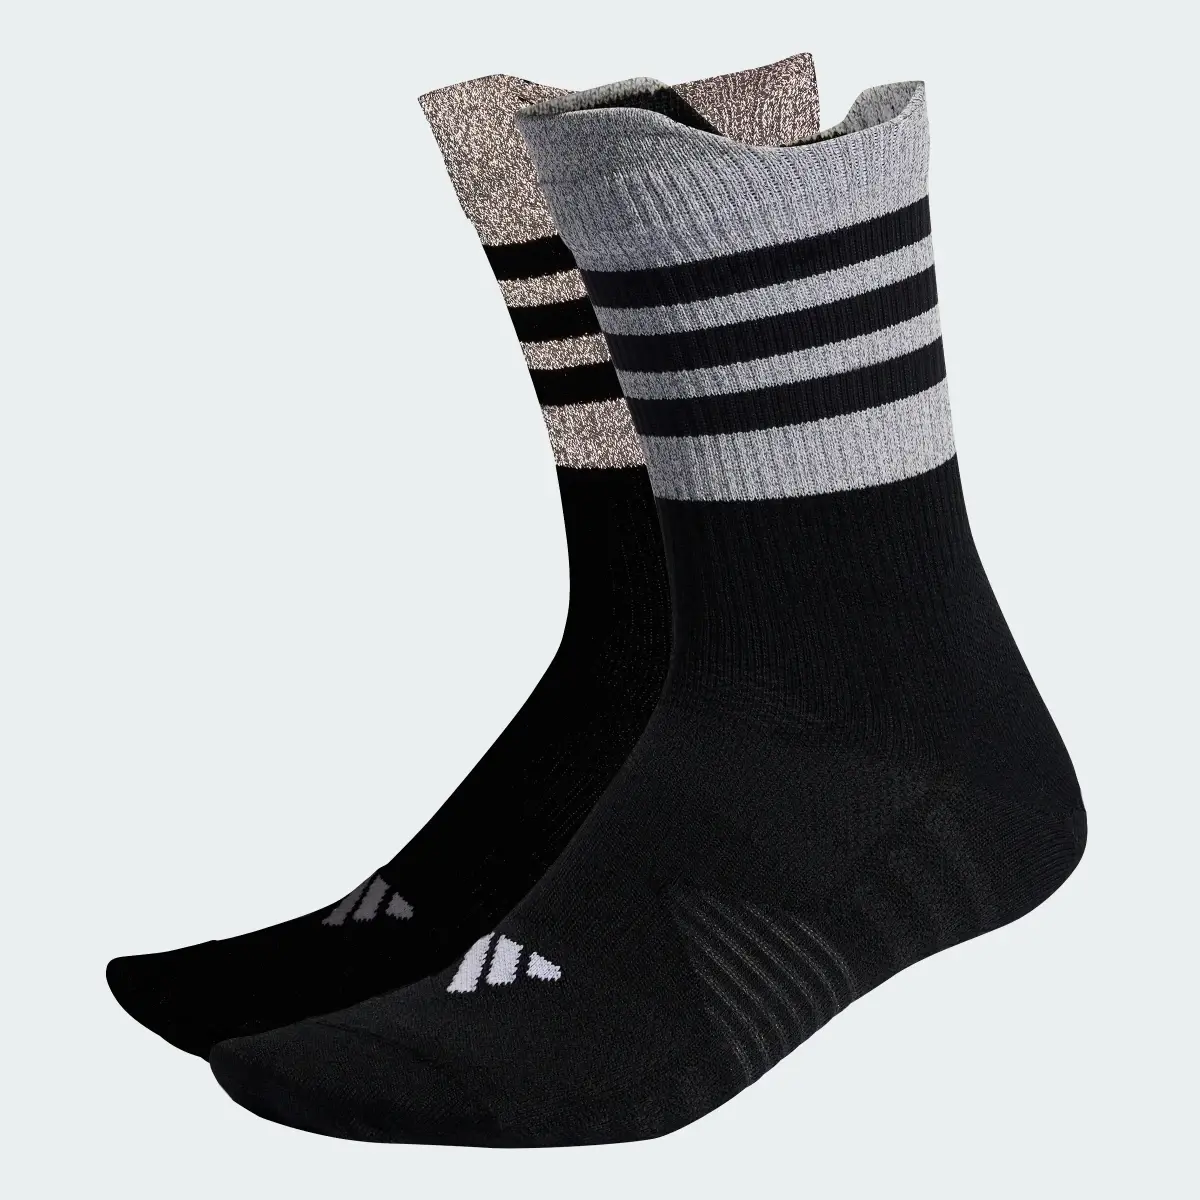 Adidas Running x Reflective Socks 1 Pair. 2